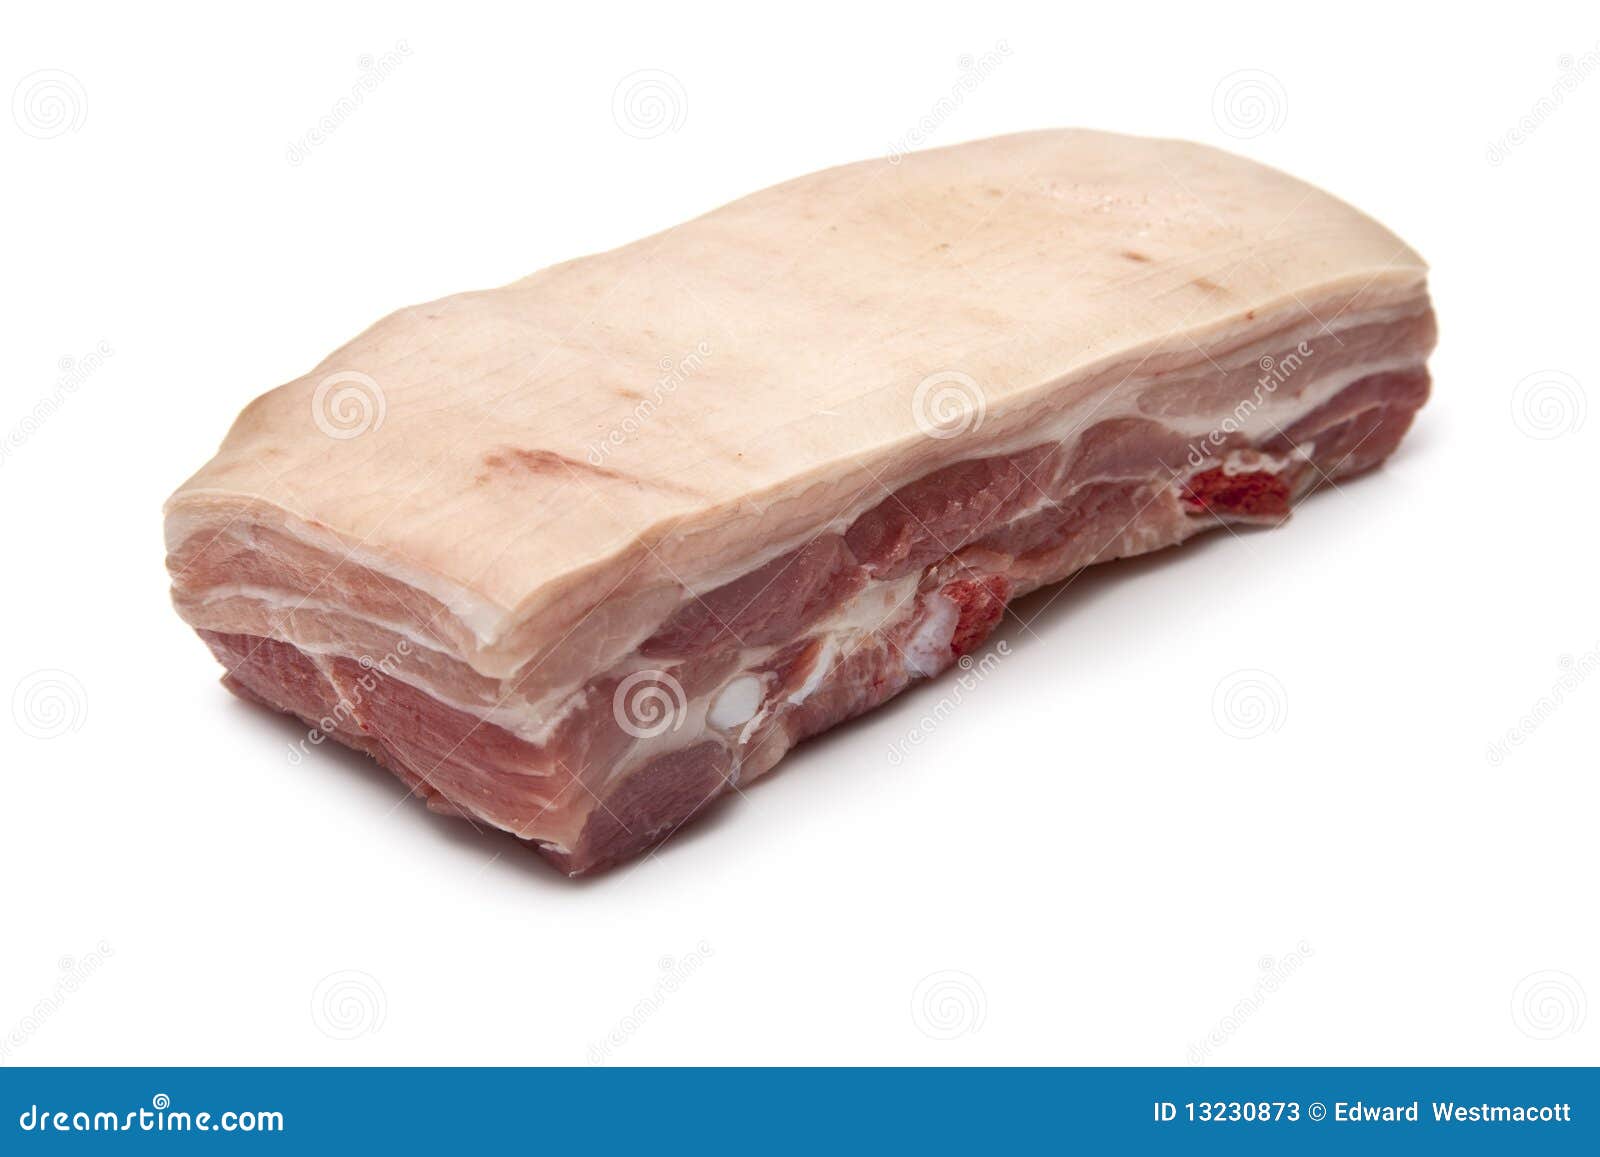 raw pork belly meat